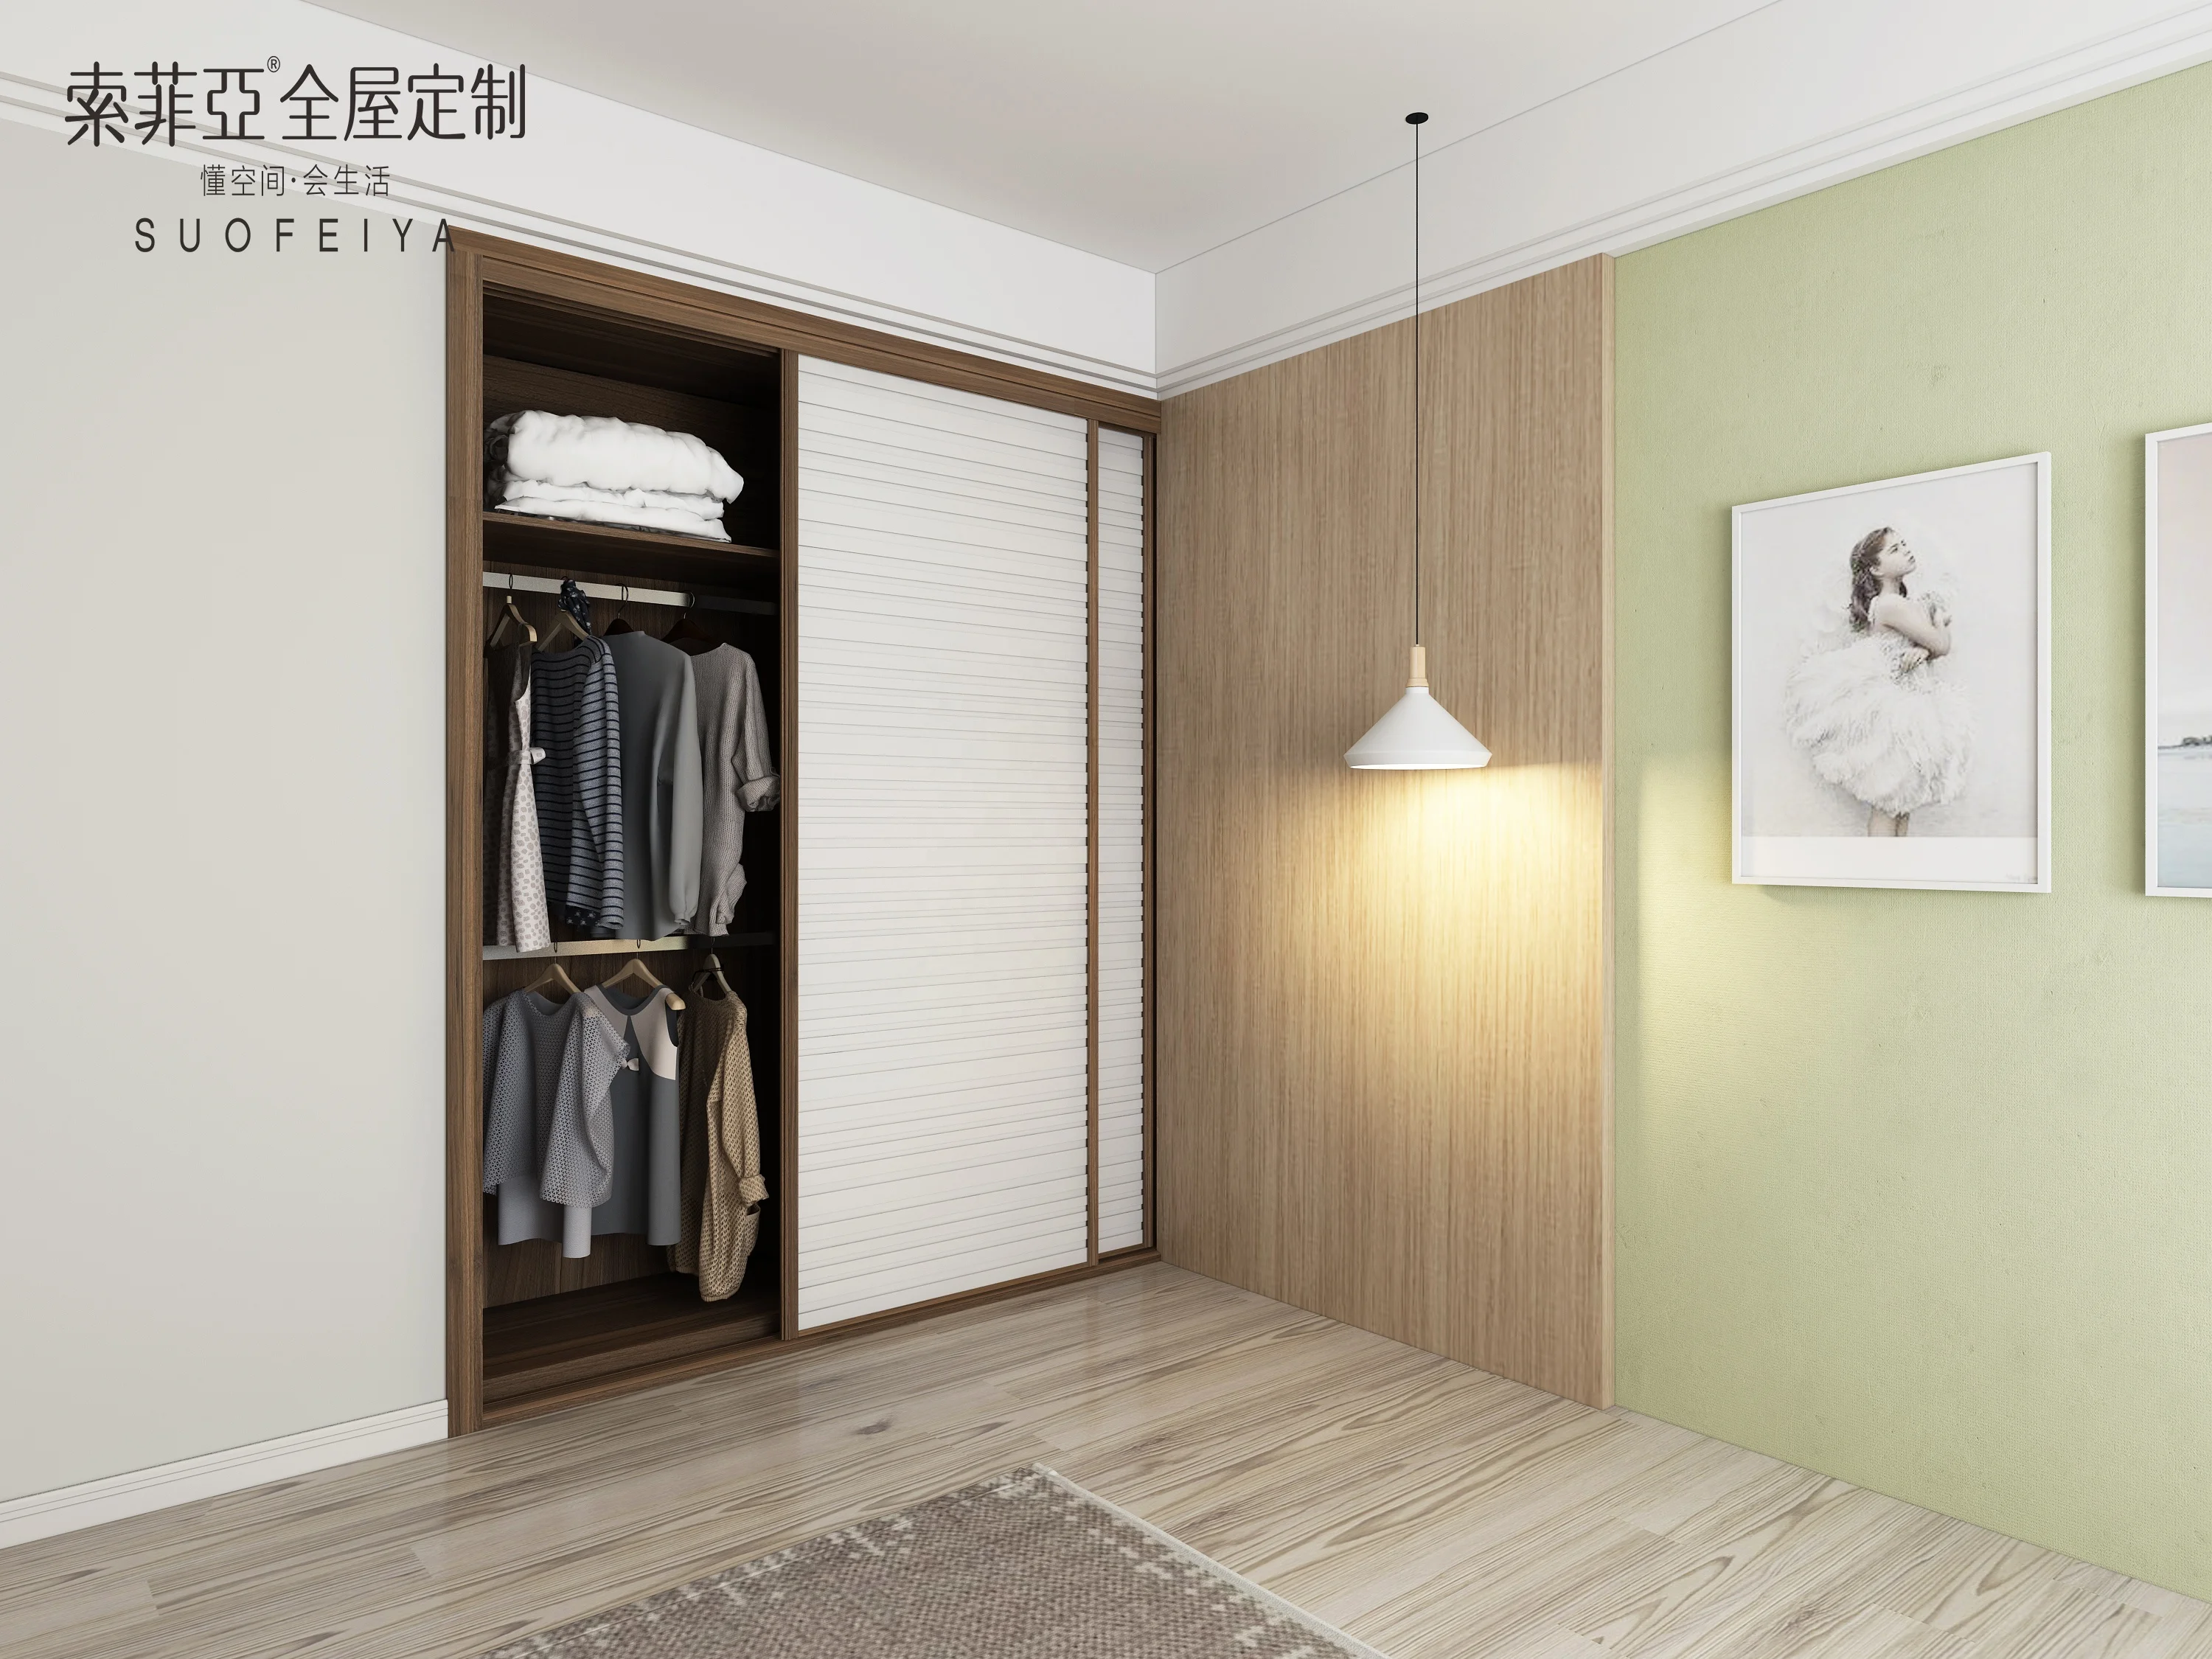 Suofeiya Custom Bedroom Furniture Slilding Door Built In Wardrobe Buy Built In Wardrobe With Sliding Door Wardrobe Built In Wardrobes Clothes Wardrobe Product On Alibaba Com